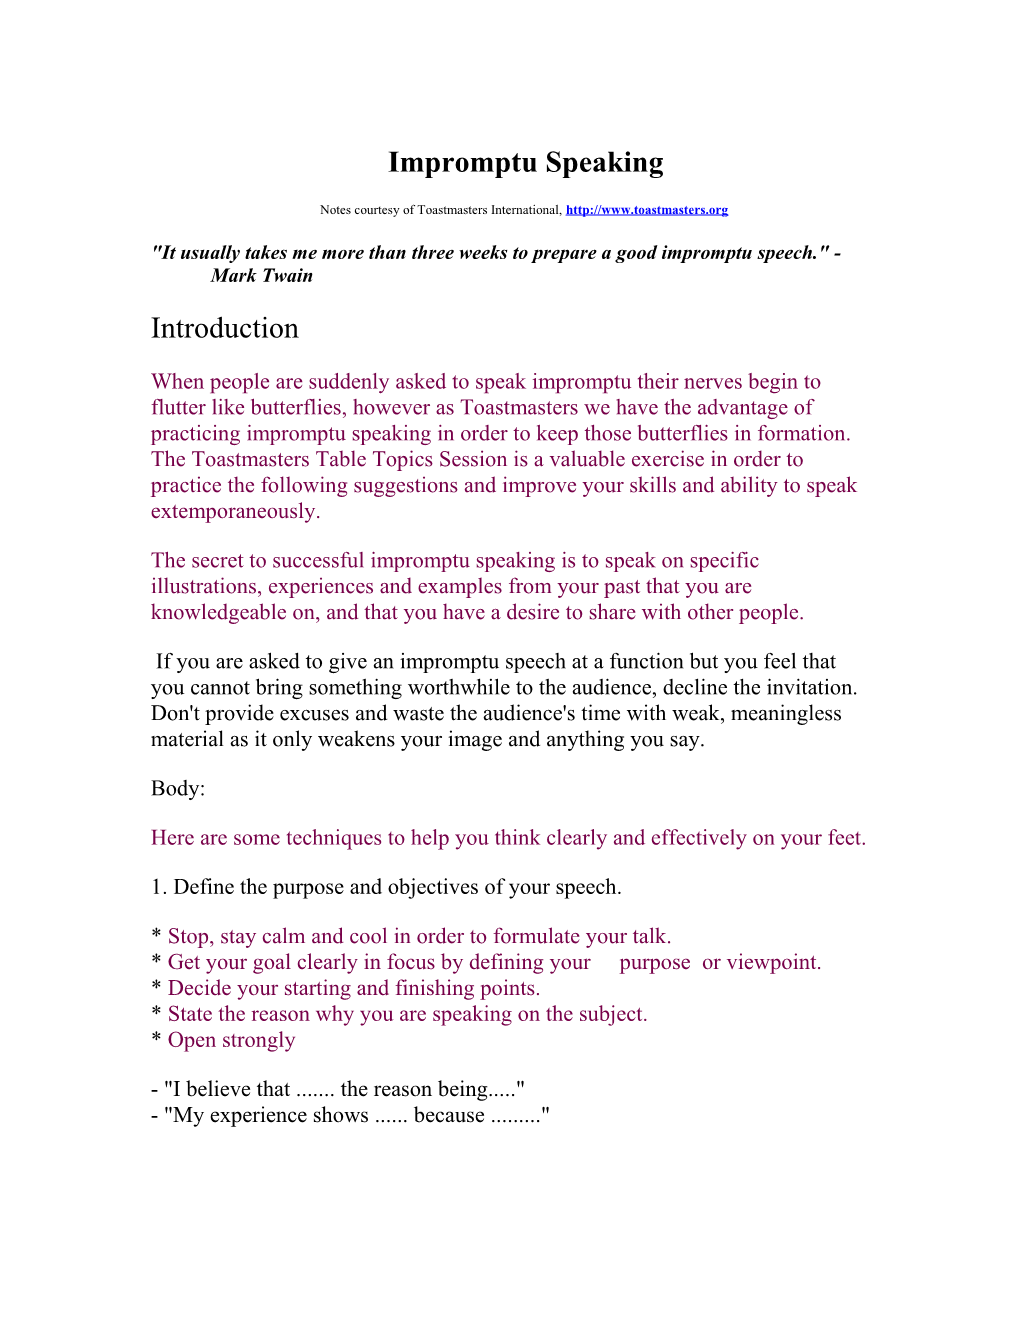 Impromptu Speaking and Ideas